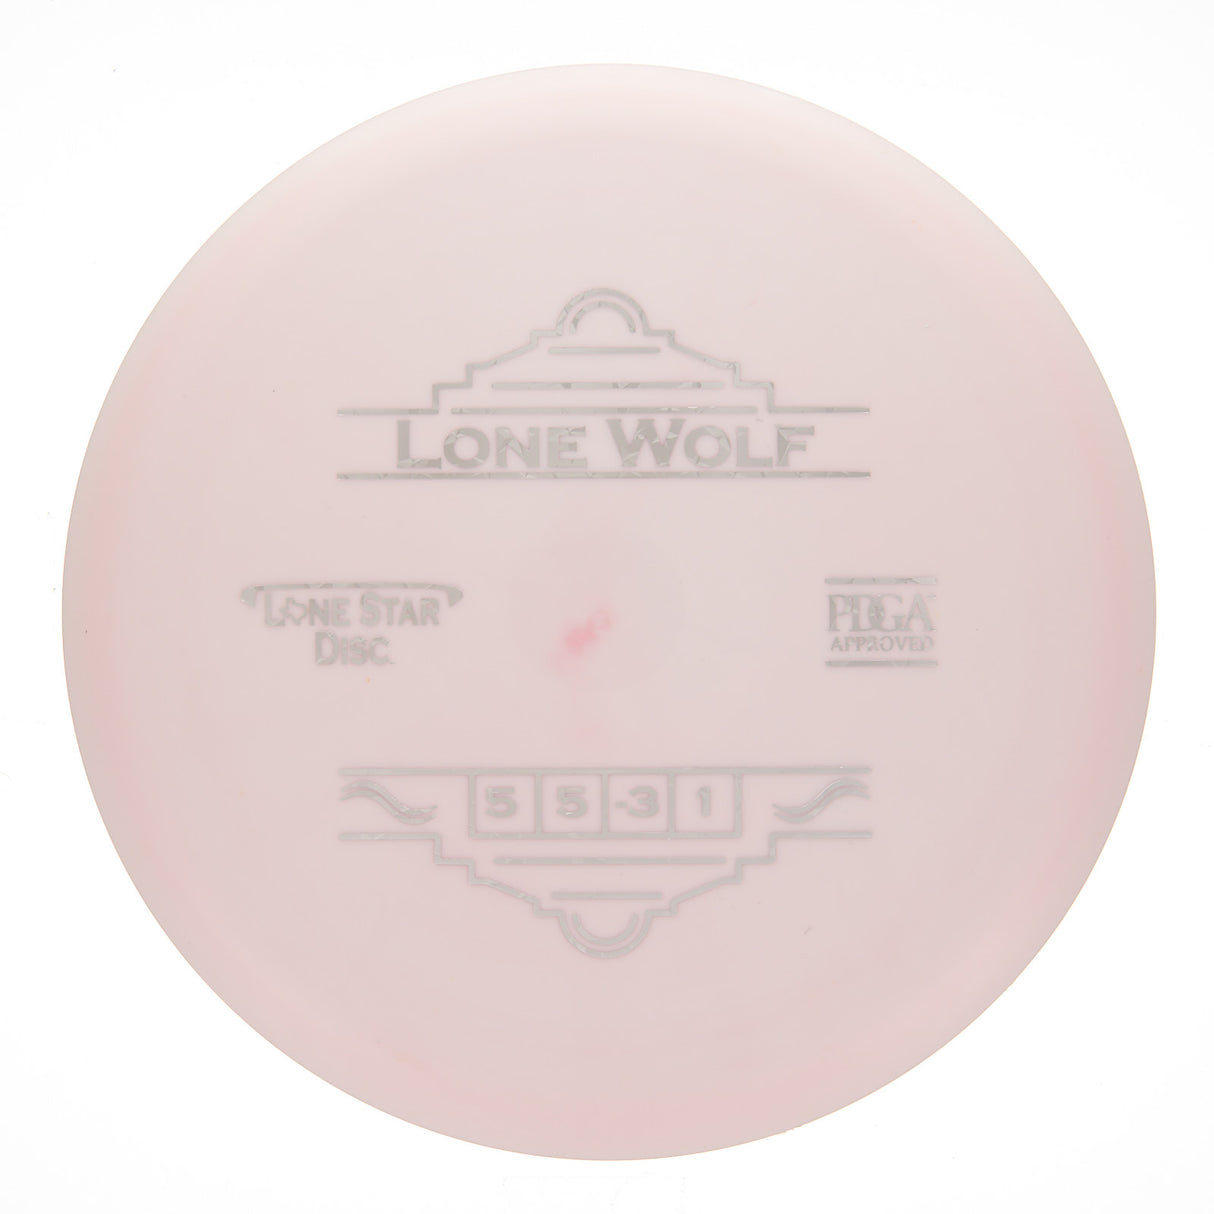 Lone Star Disc Lone Wolf - Bravo 171g | Style 0001